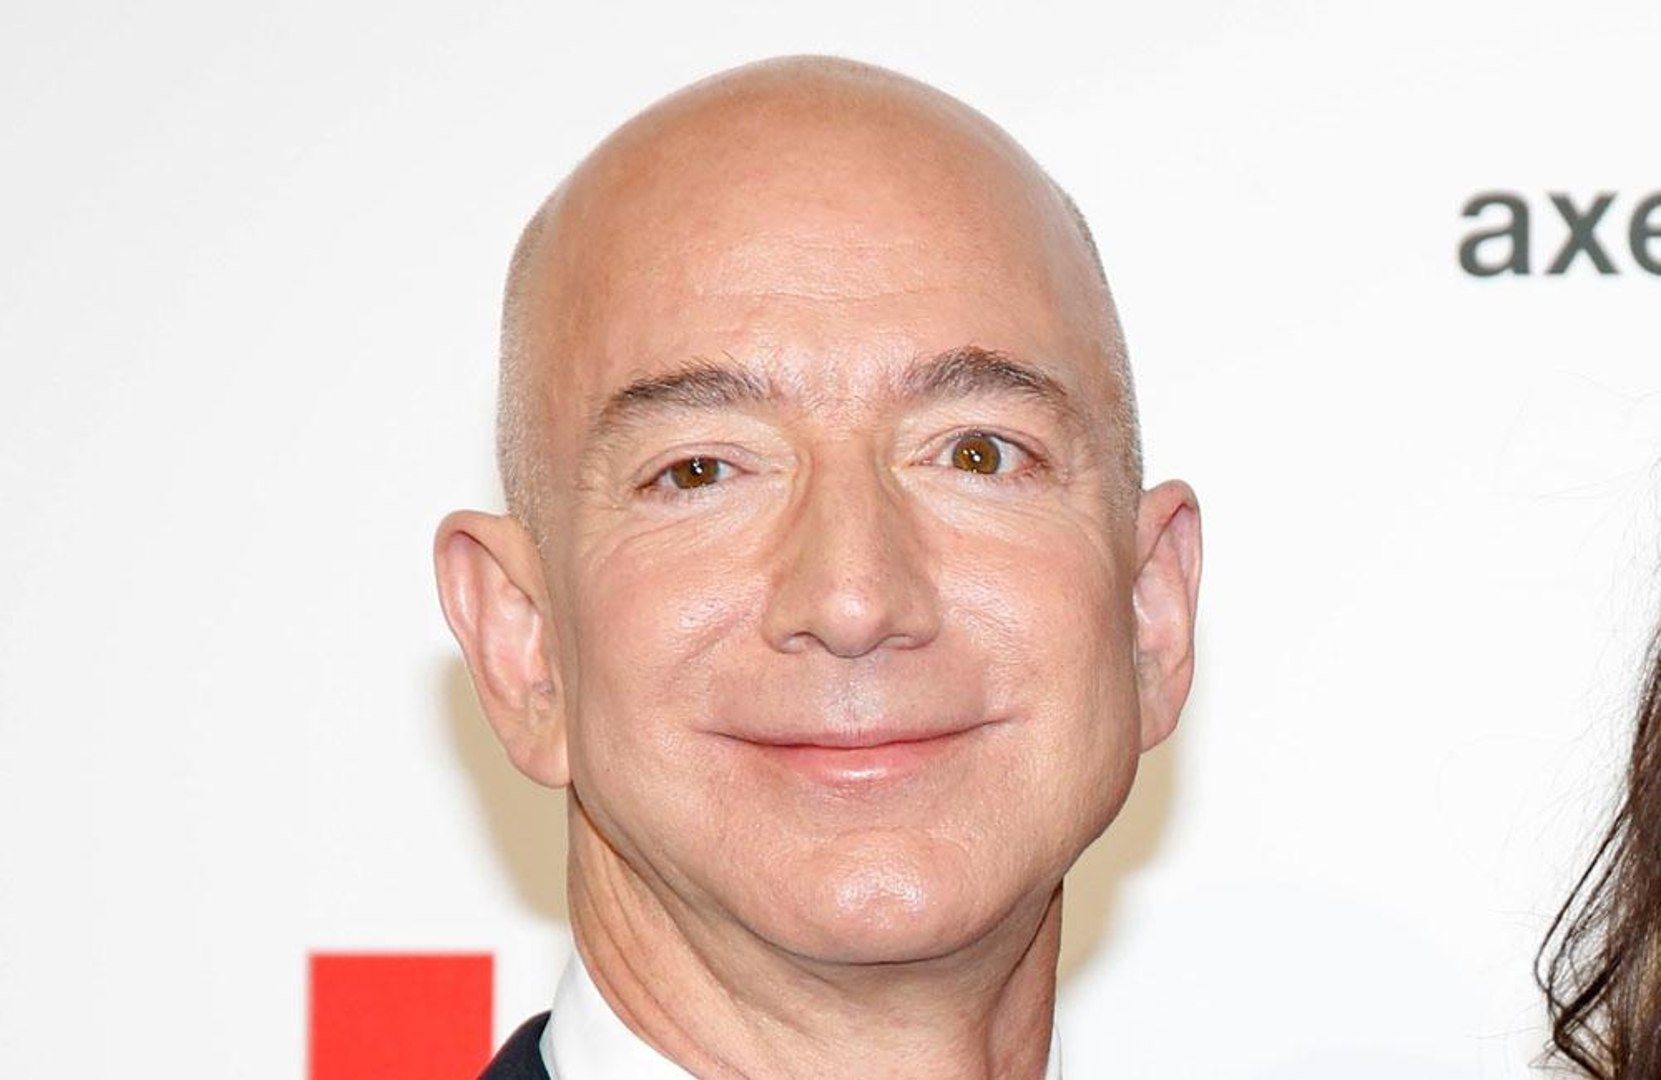 ⁣Jeff Bezos named first person worth $200 billion